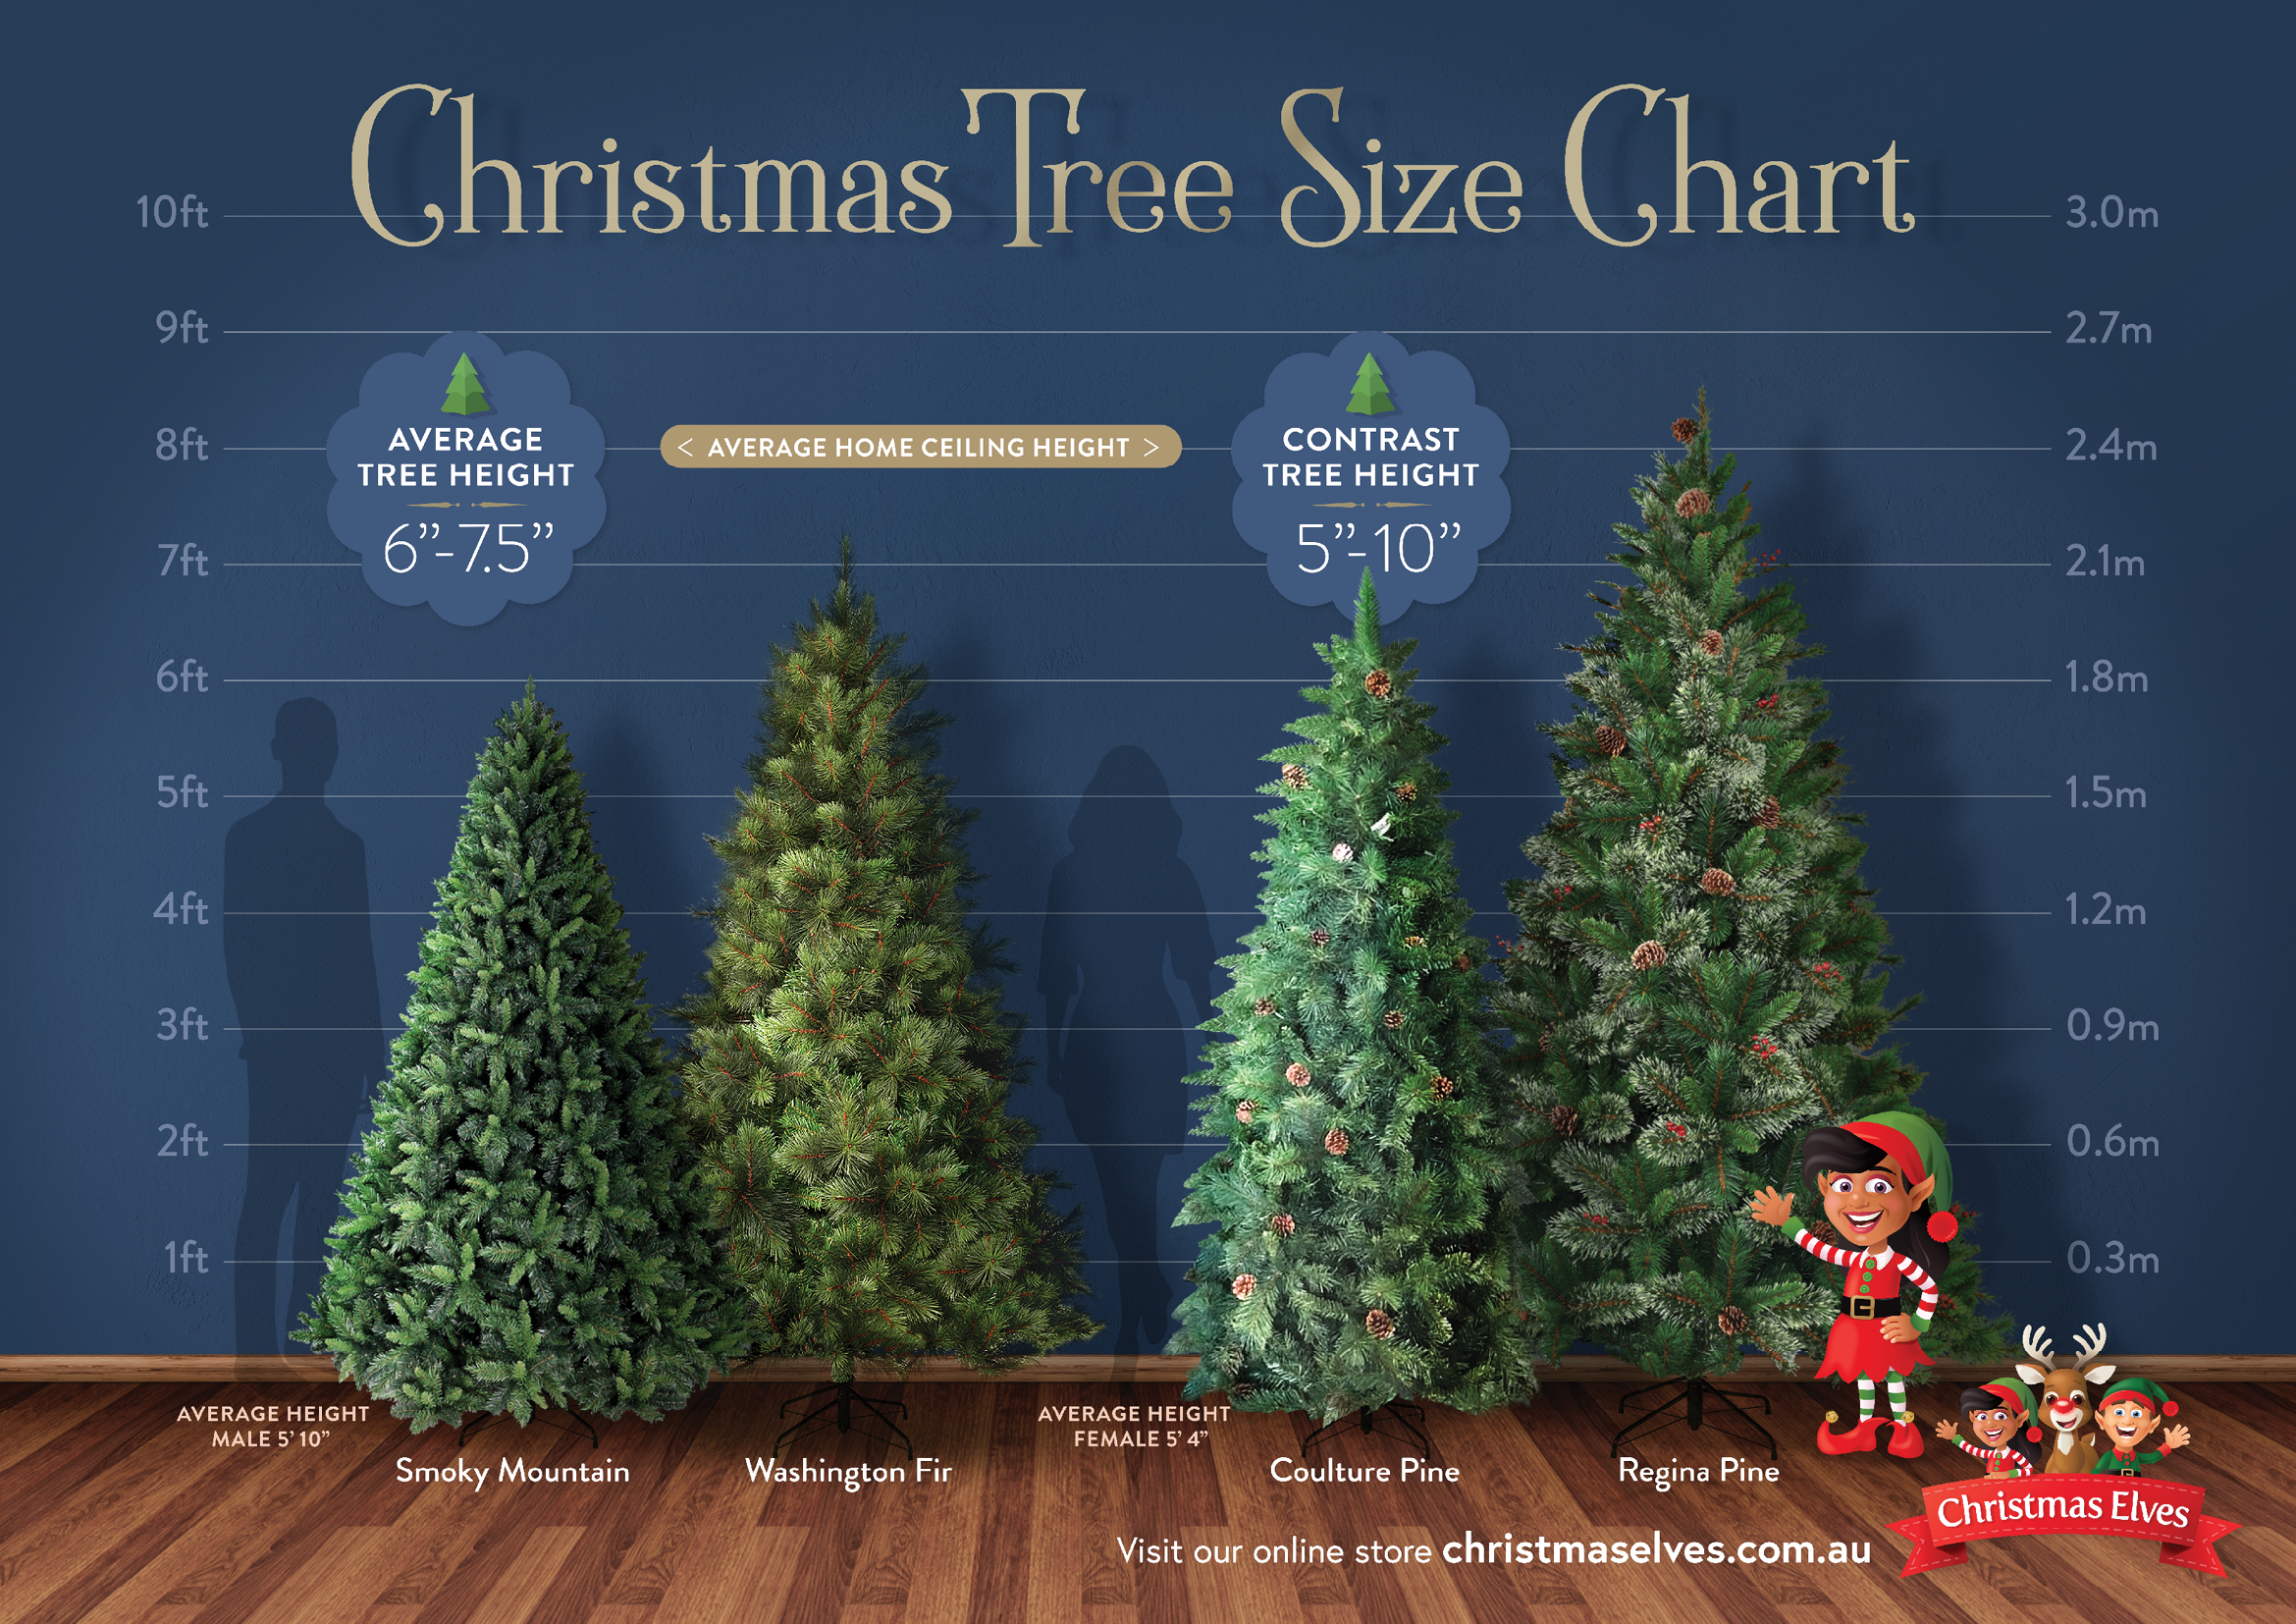 Choosing your perfect Christmas Tree